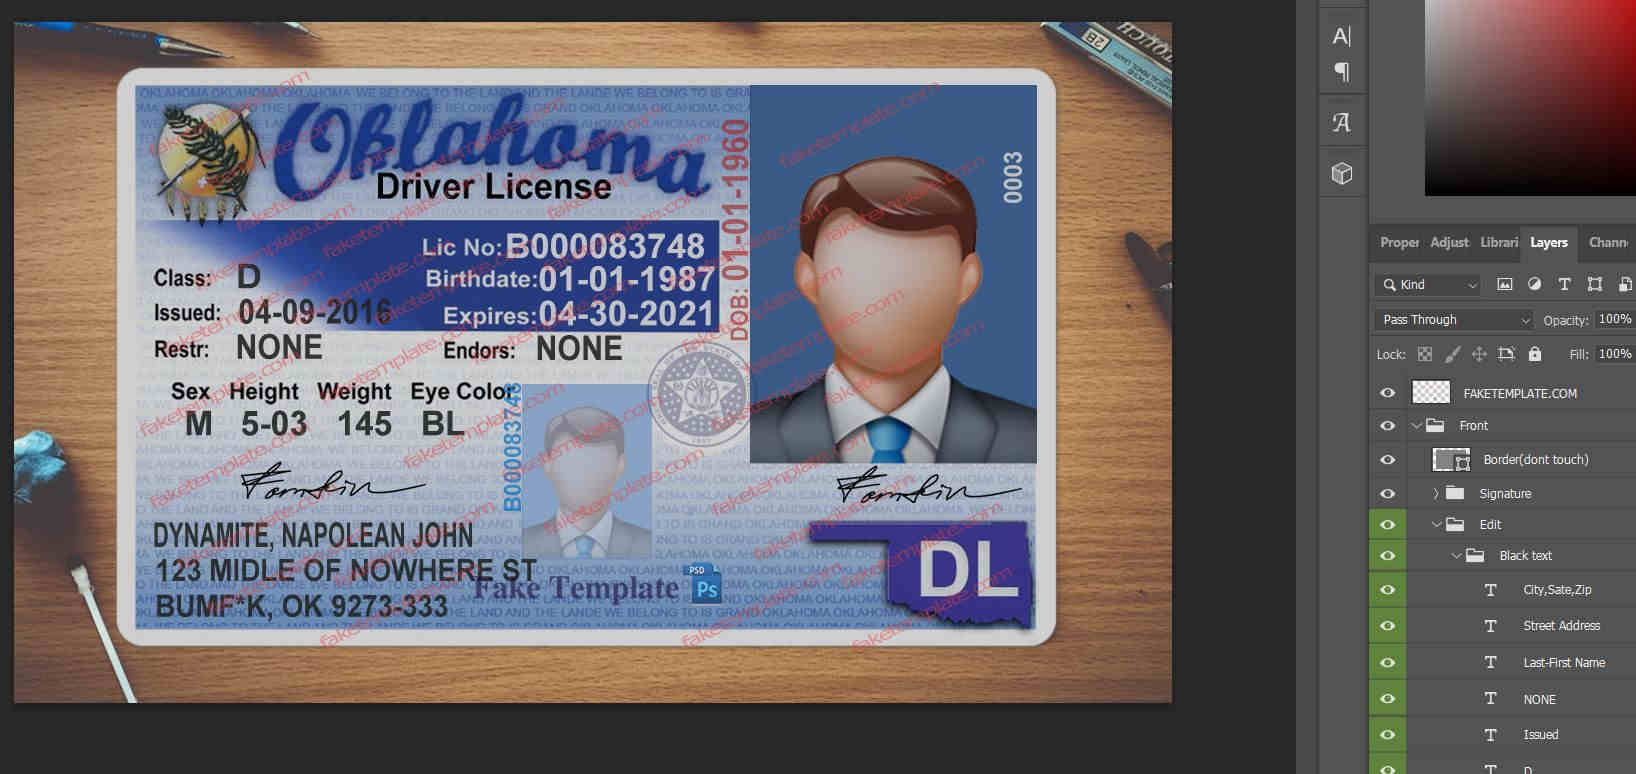 oklahoma-driver-license-template-v1-fake-template